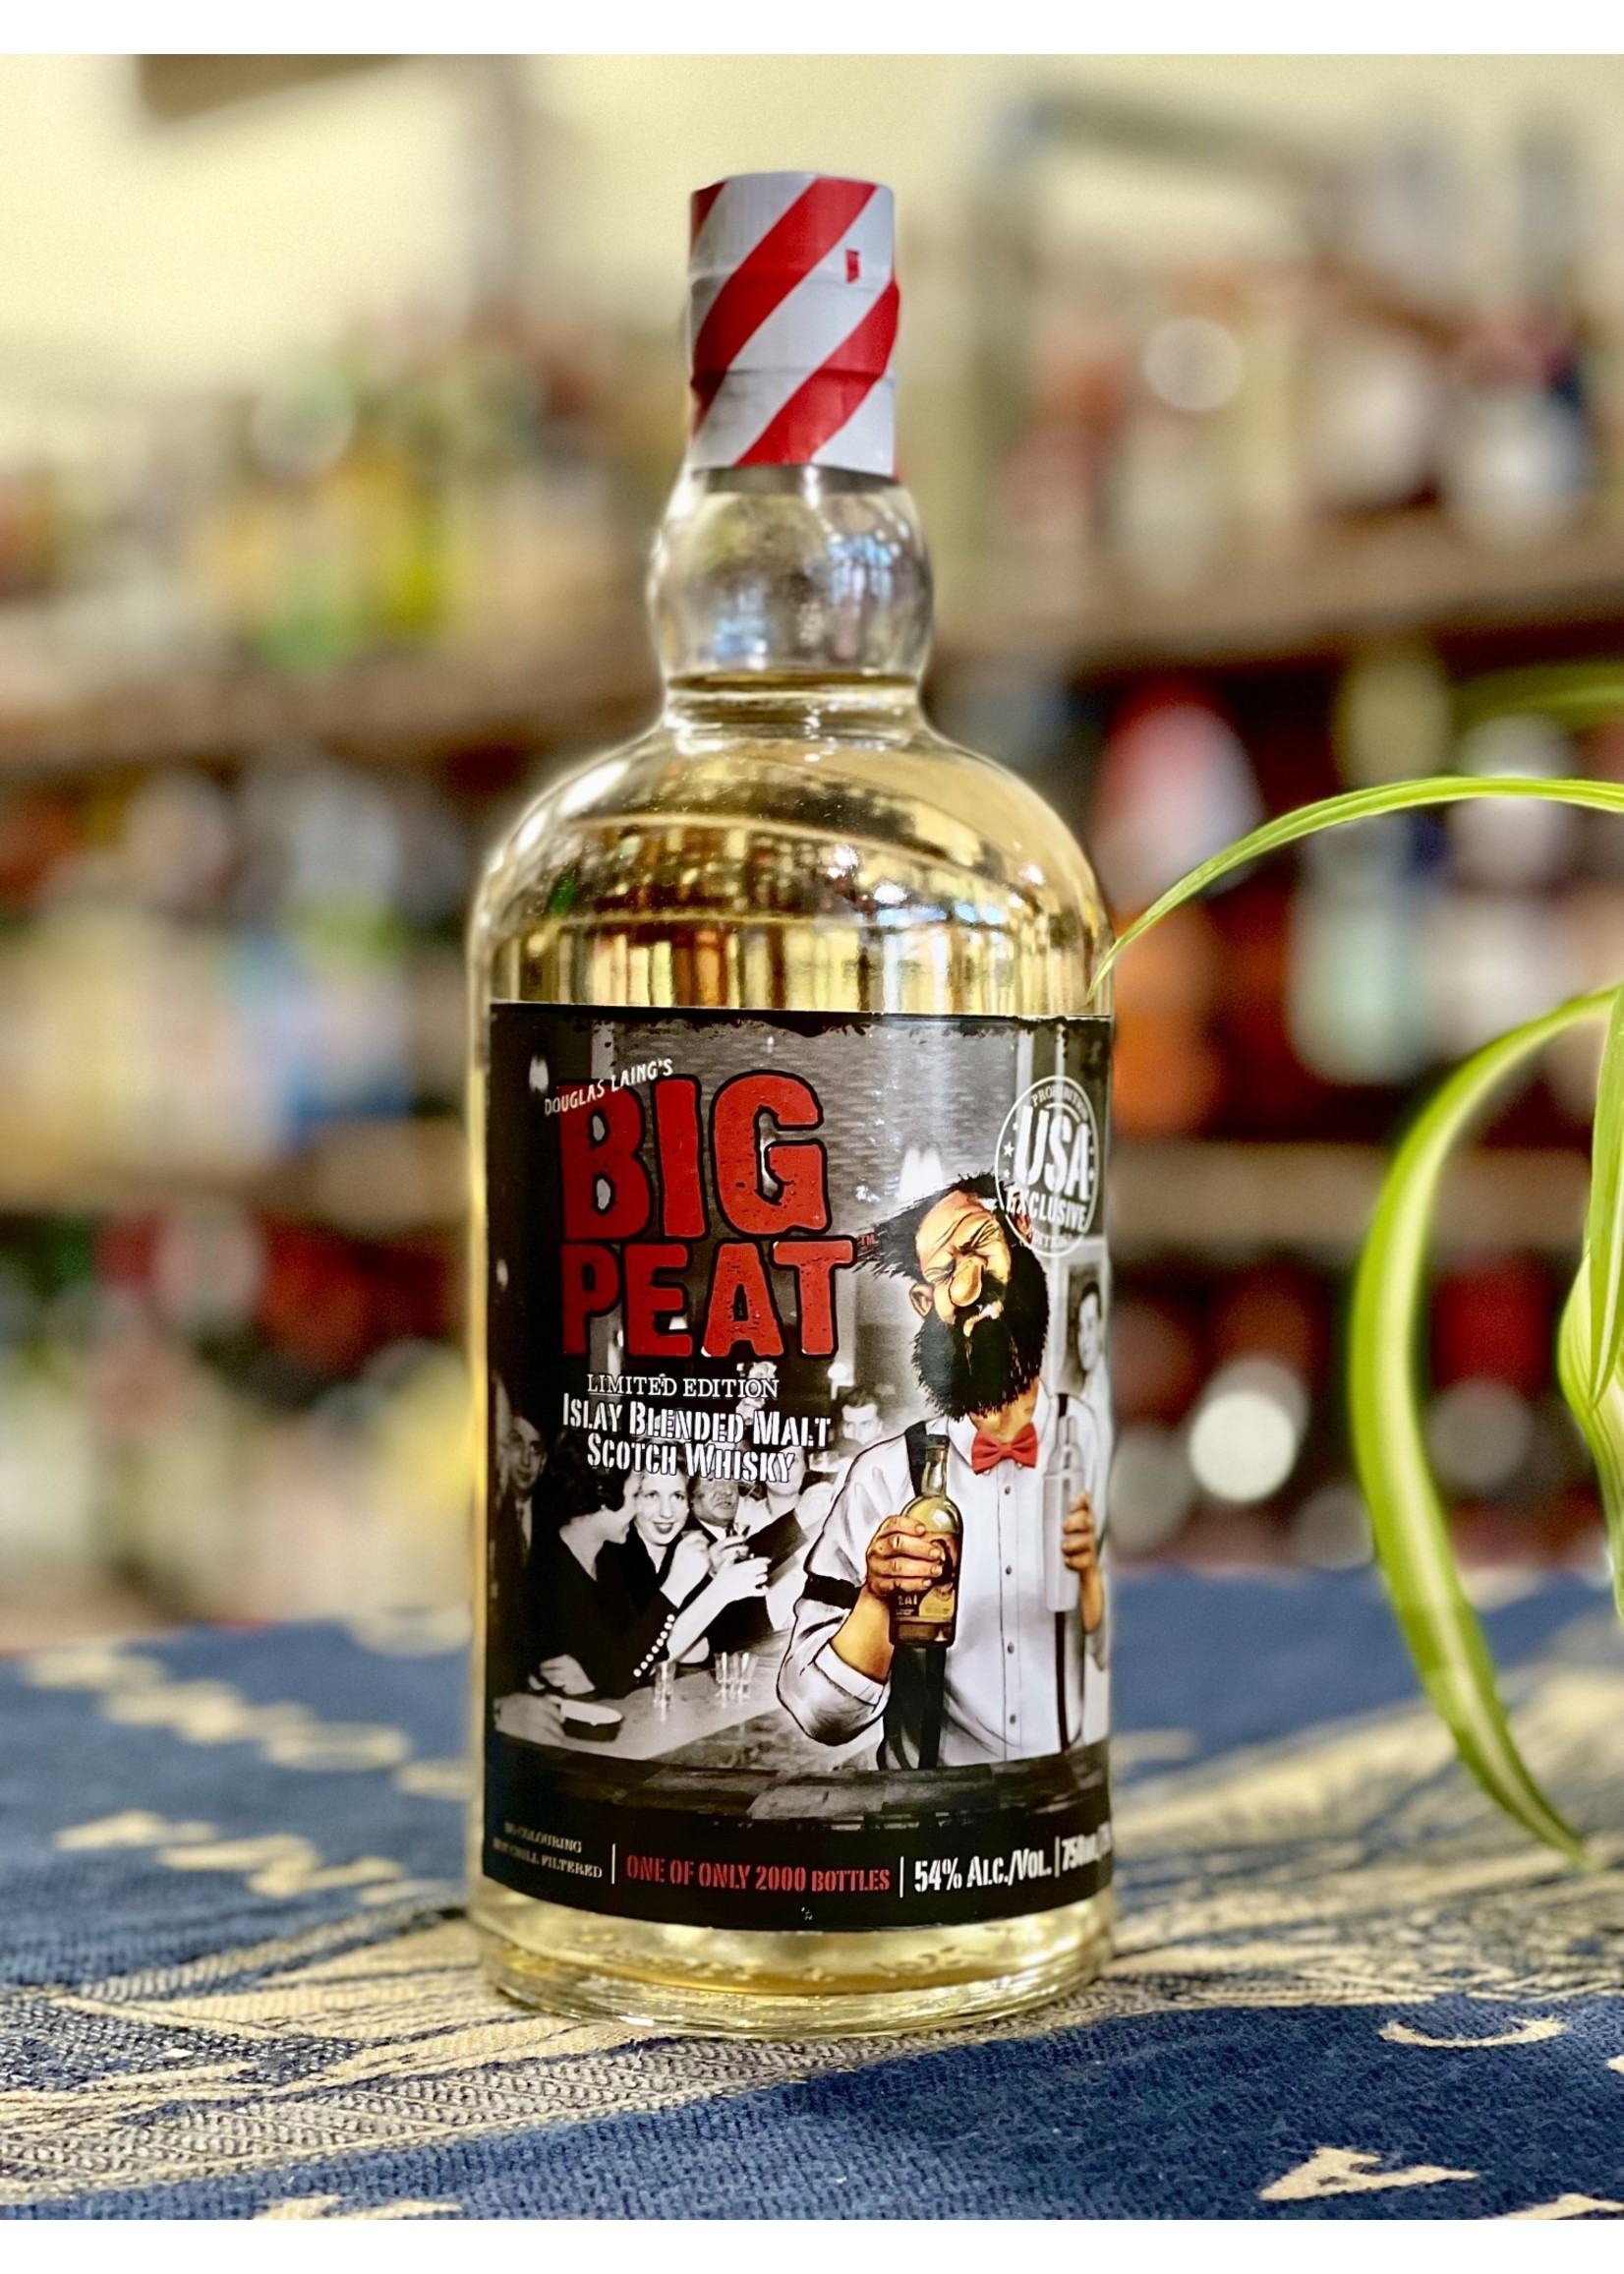 Douglas Laing Douglas Laing / Big Peat Prohibition Edition Scotch Whisky / 750mL